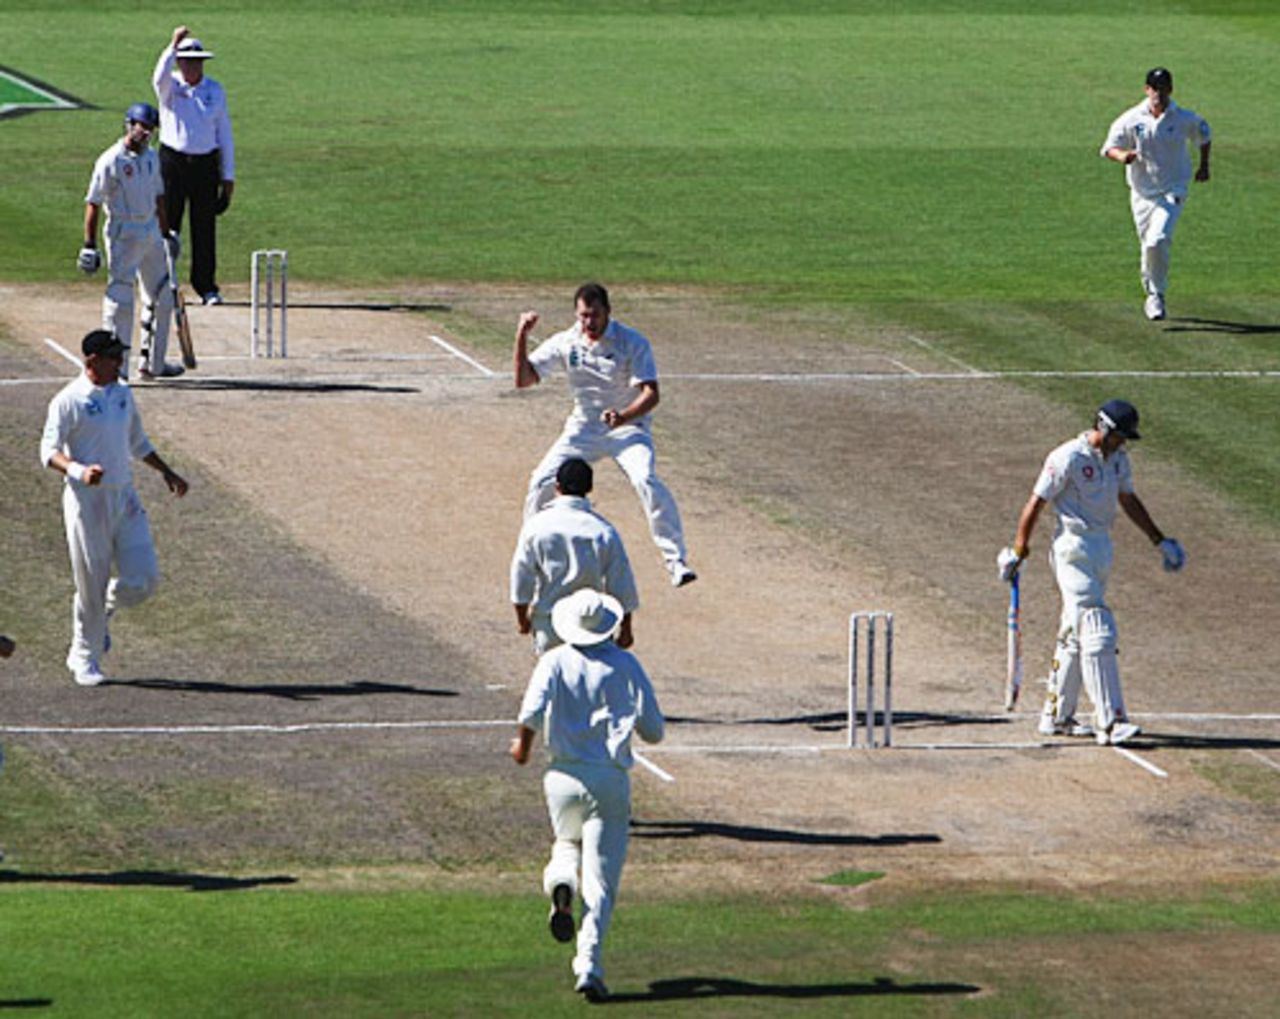 Kyle Mills starts England's slide by dismissing Alastair Cook, New Zealand v England, 1st Test, Hamilton, March 9, 2008